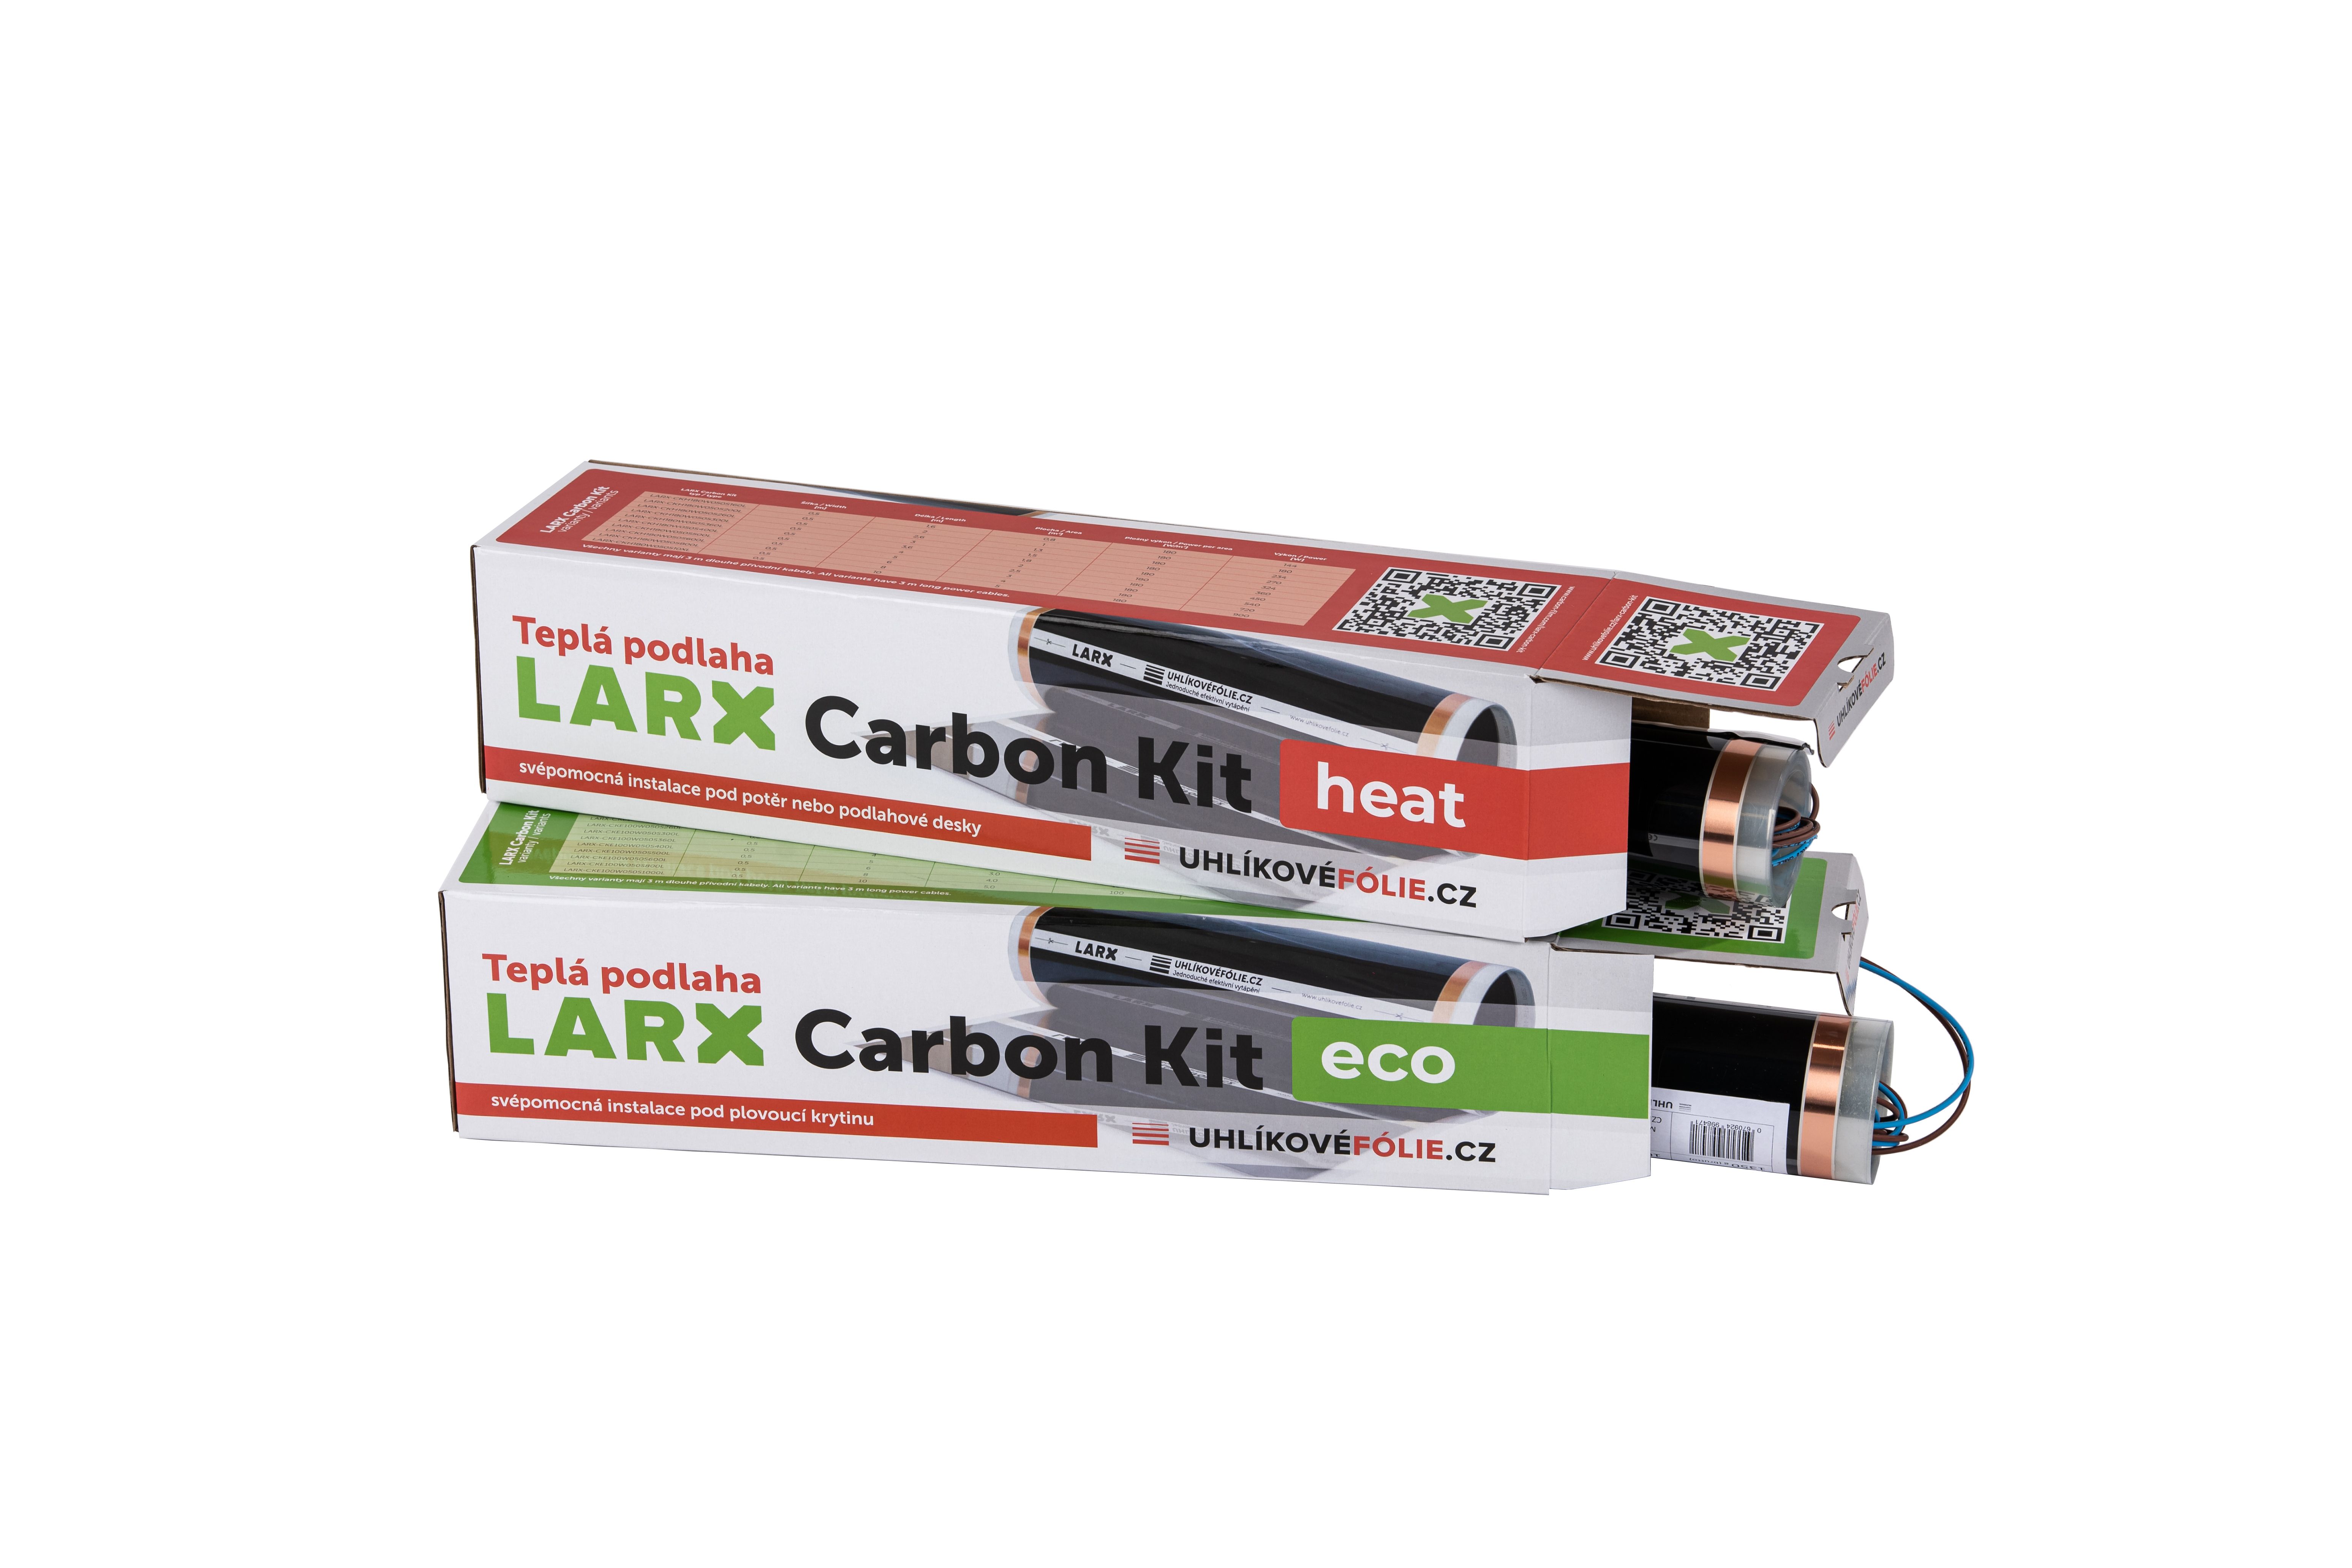 larx carbon kit heat eco, uhlikove folie, topne folie larx